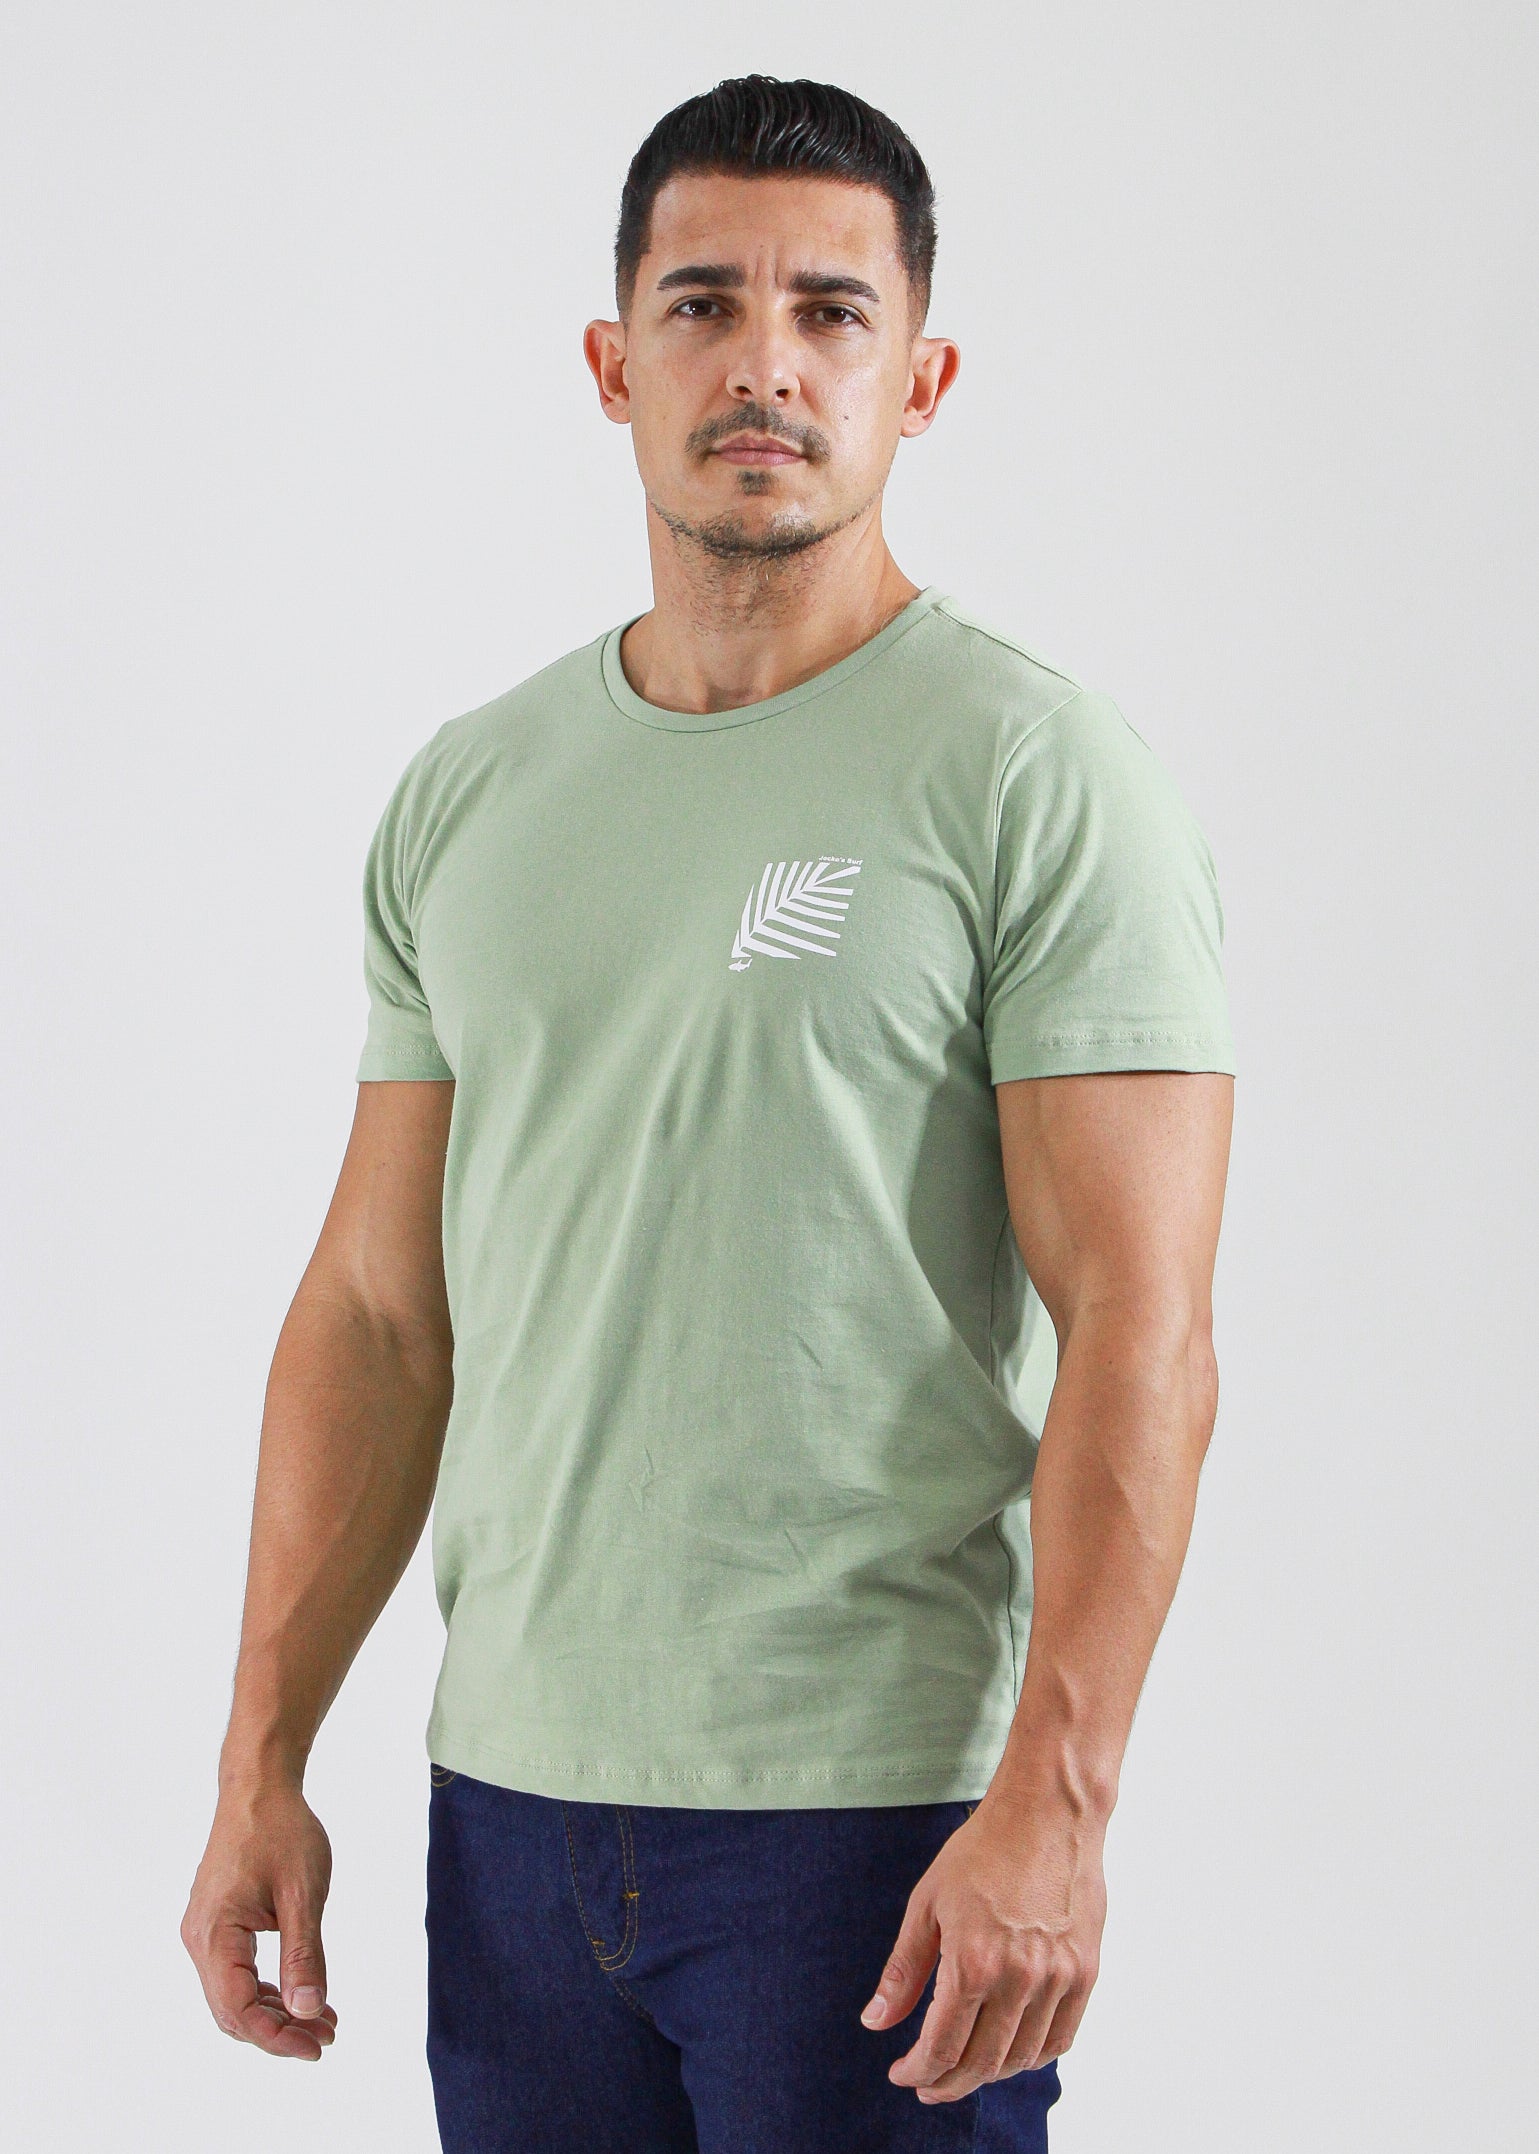 Camiseta Estampada Jocko's Surf - Verde